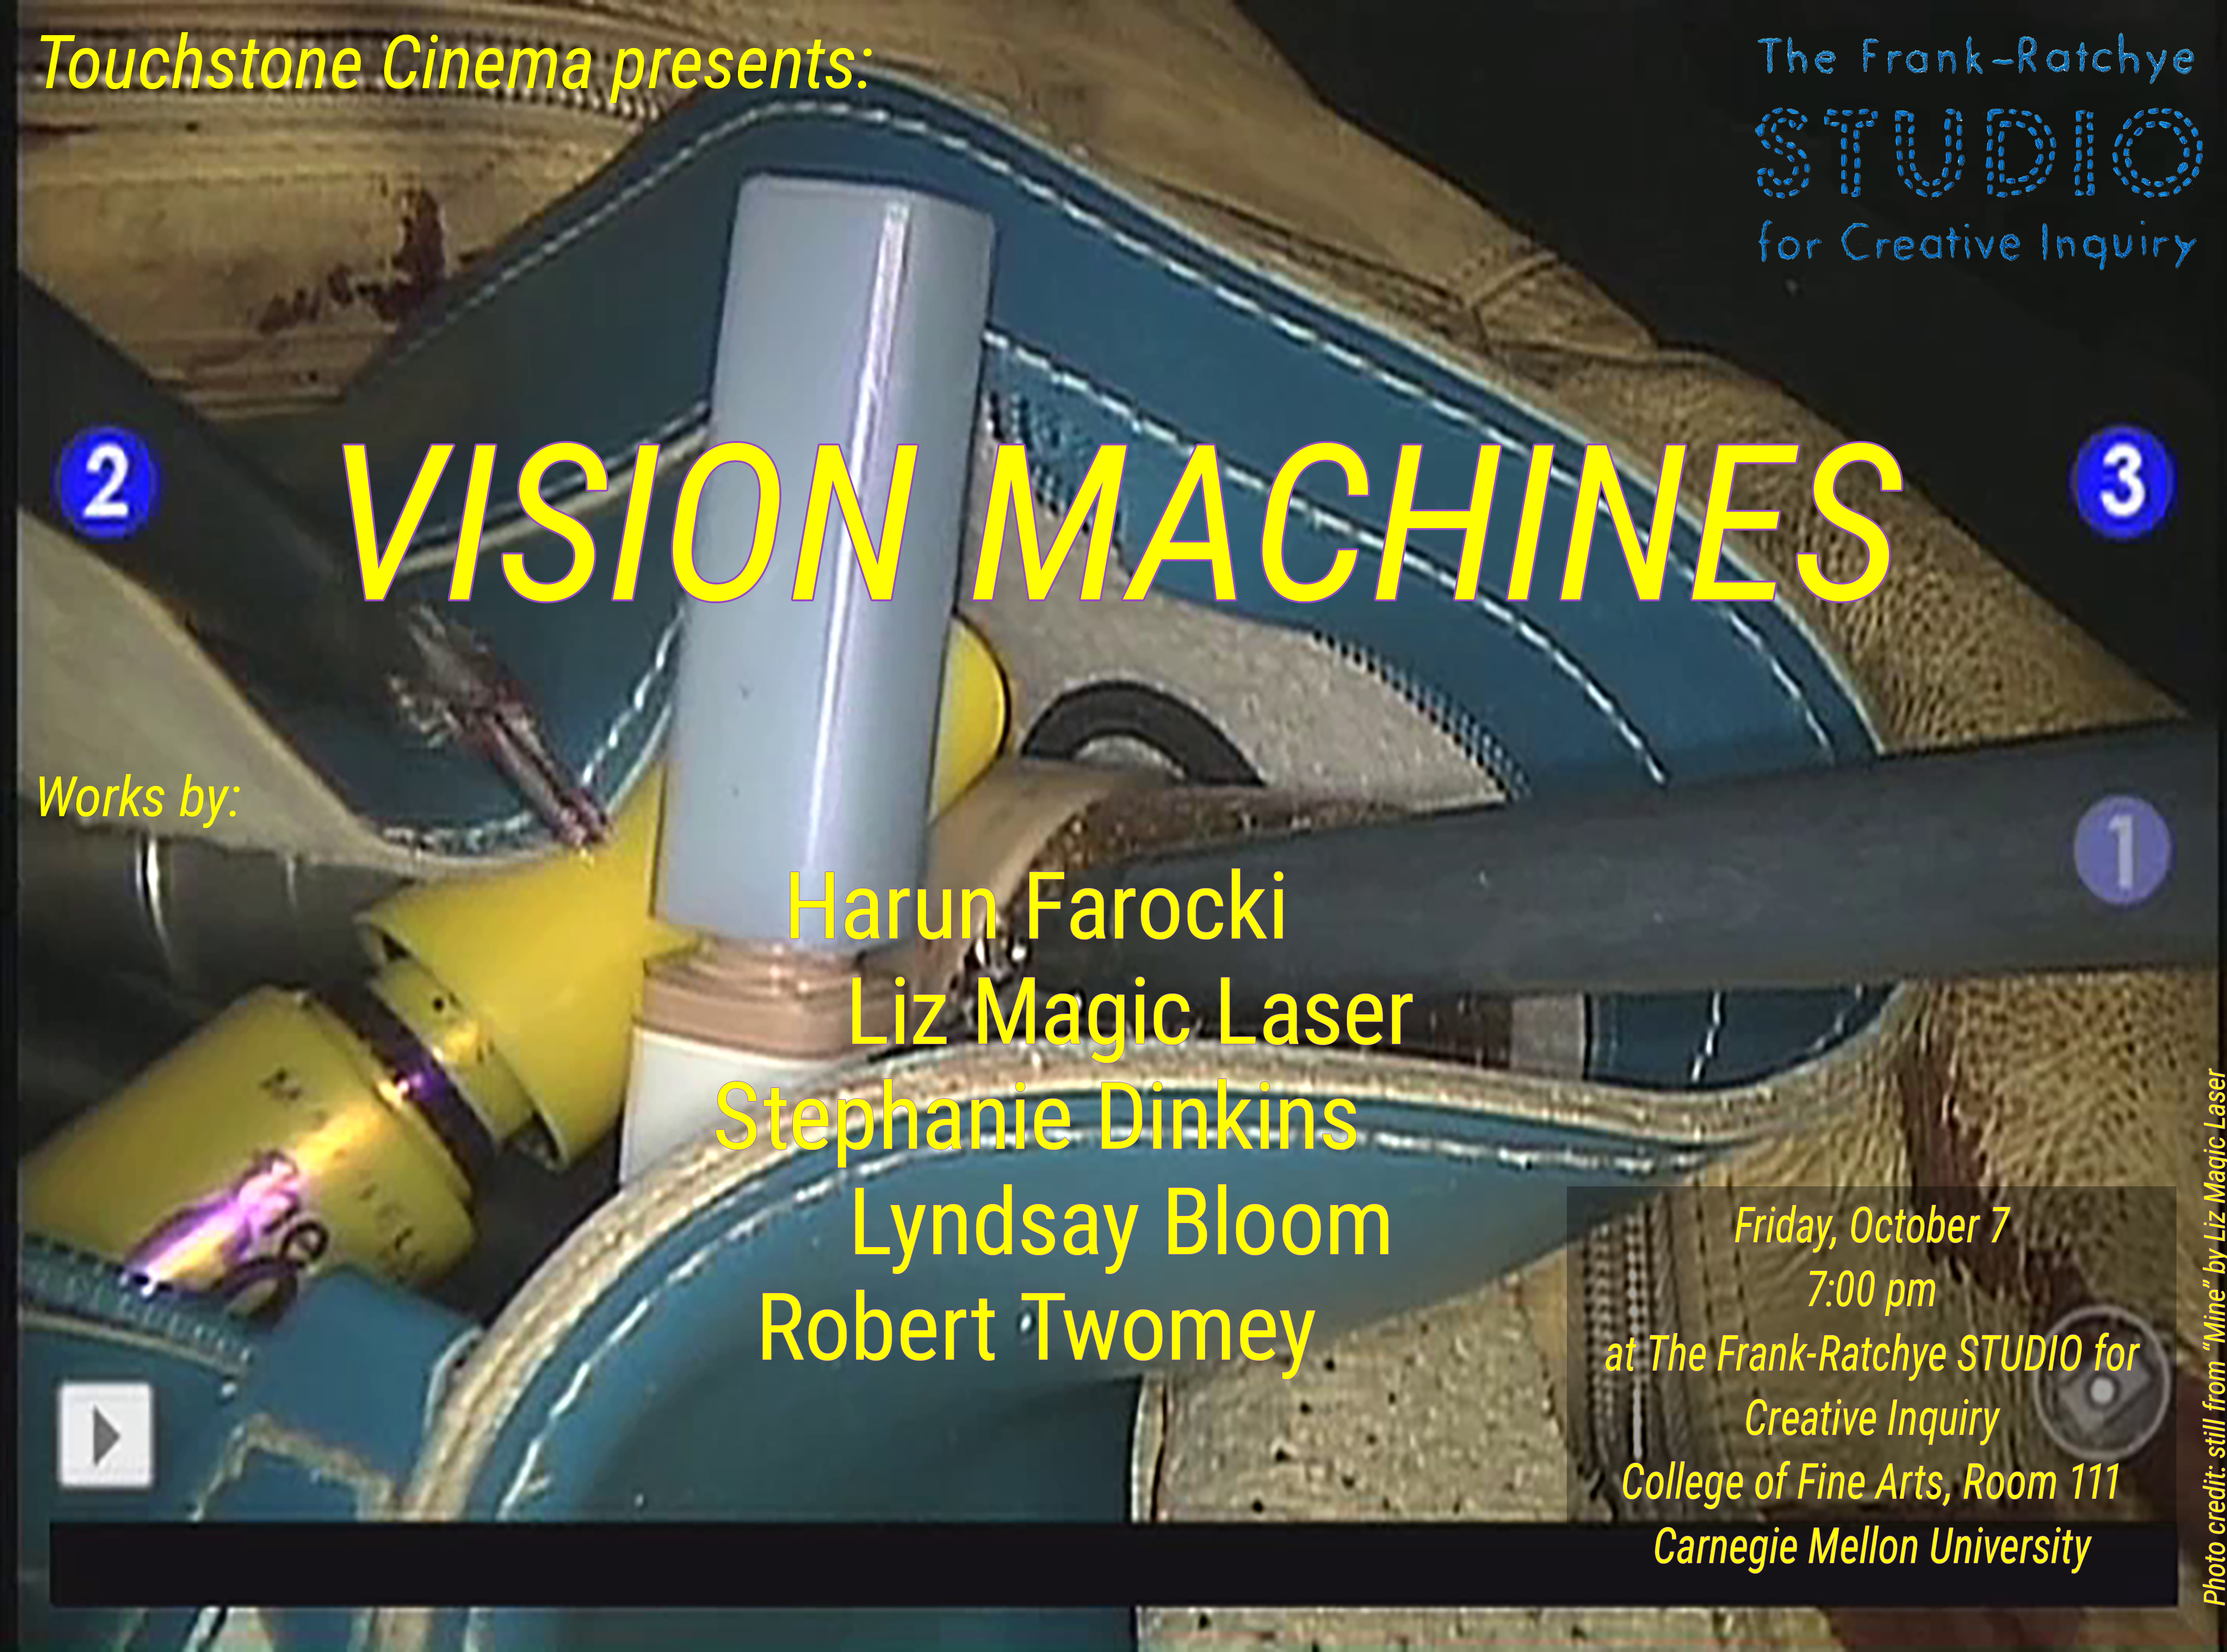 vision-machines---invitation.jpg